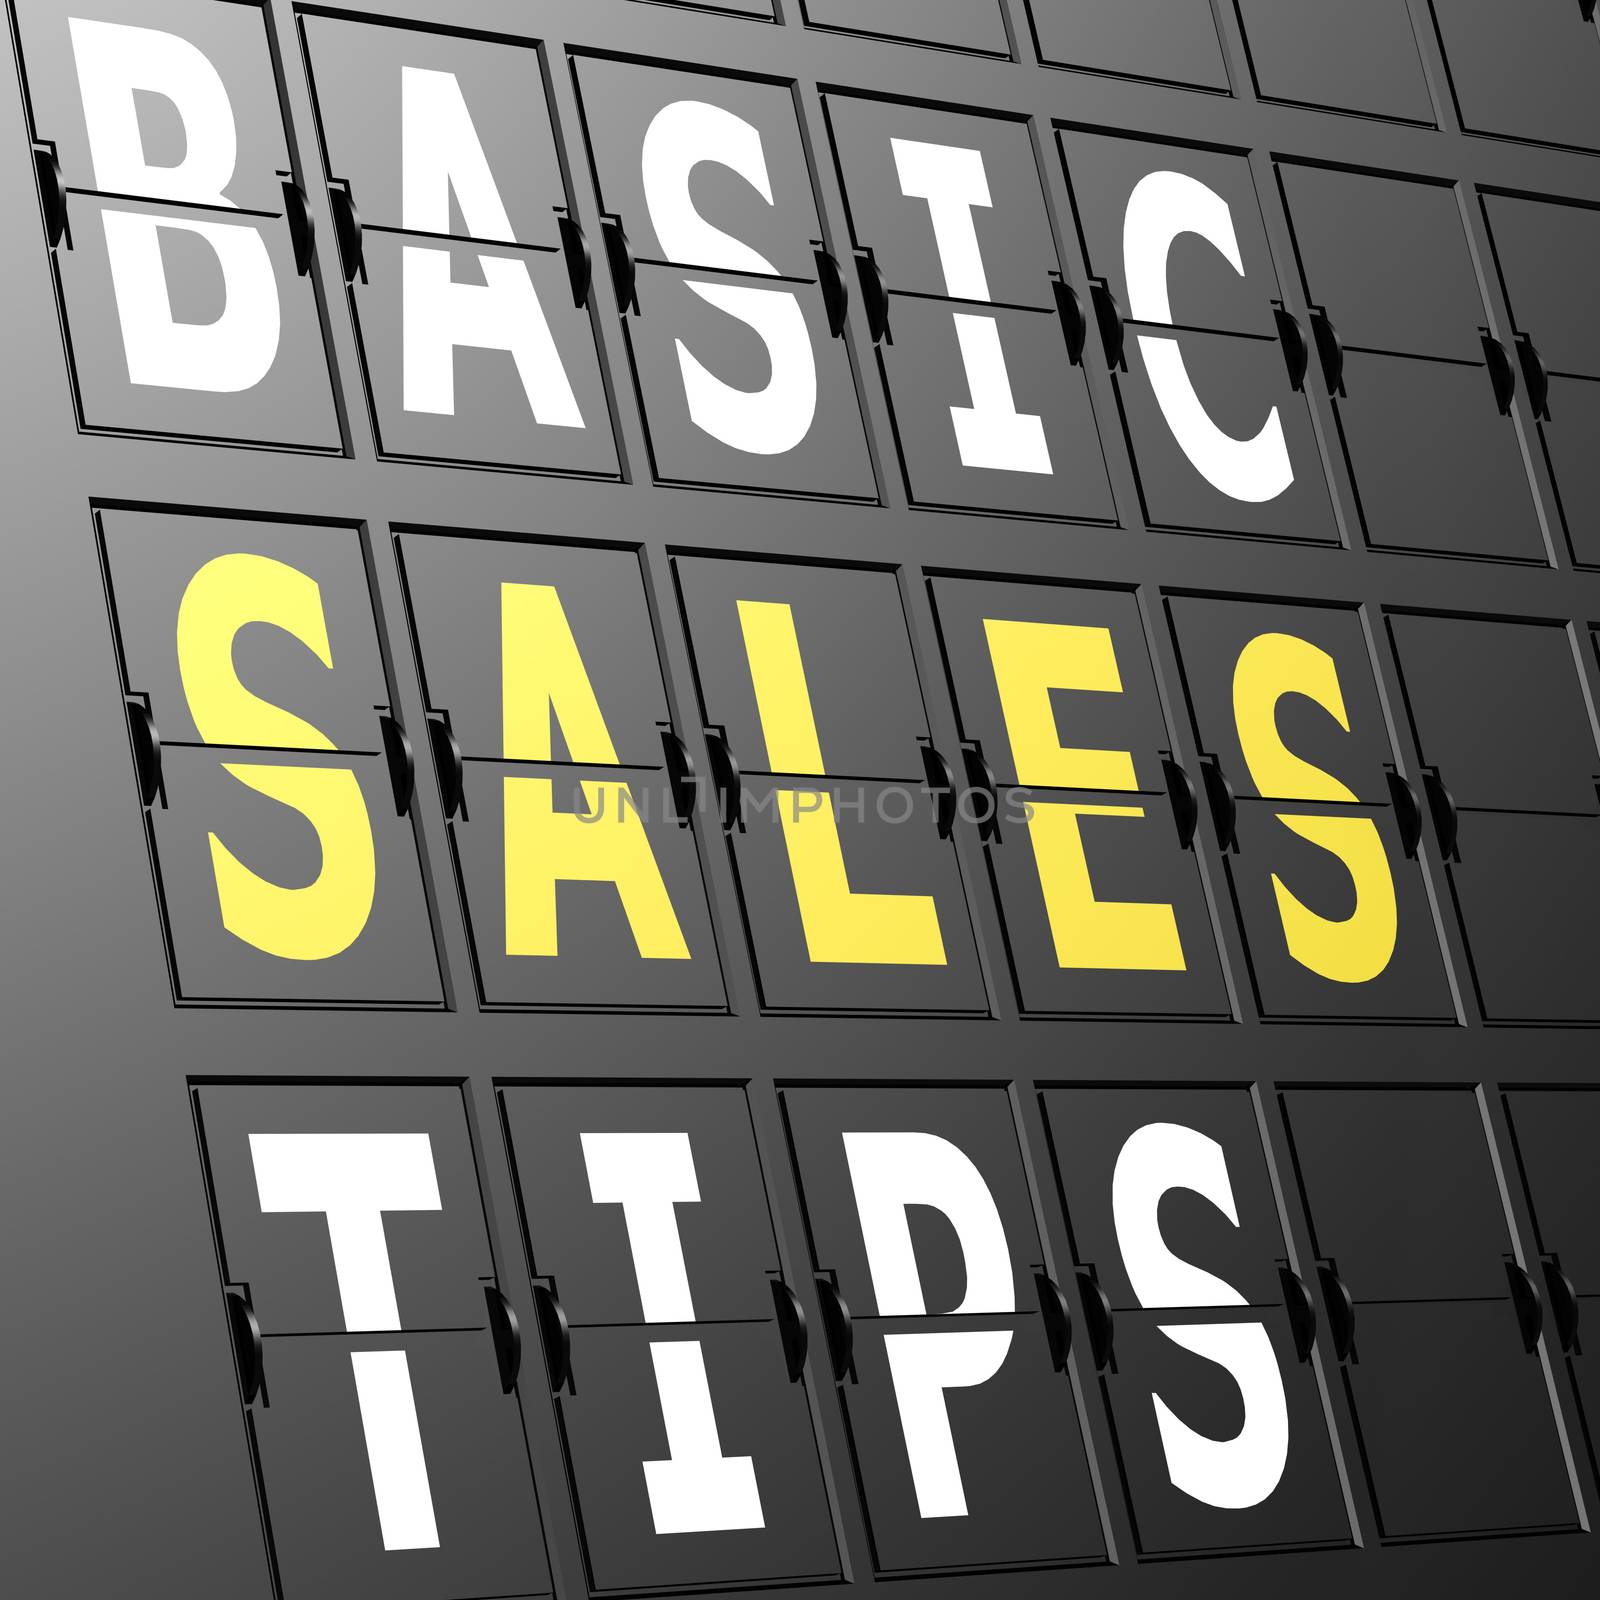 Airport display basic sales tips by tang90246